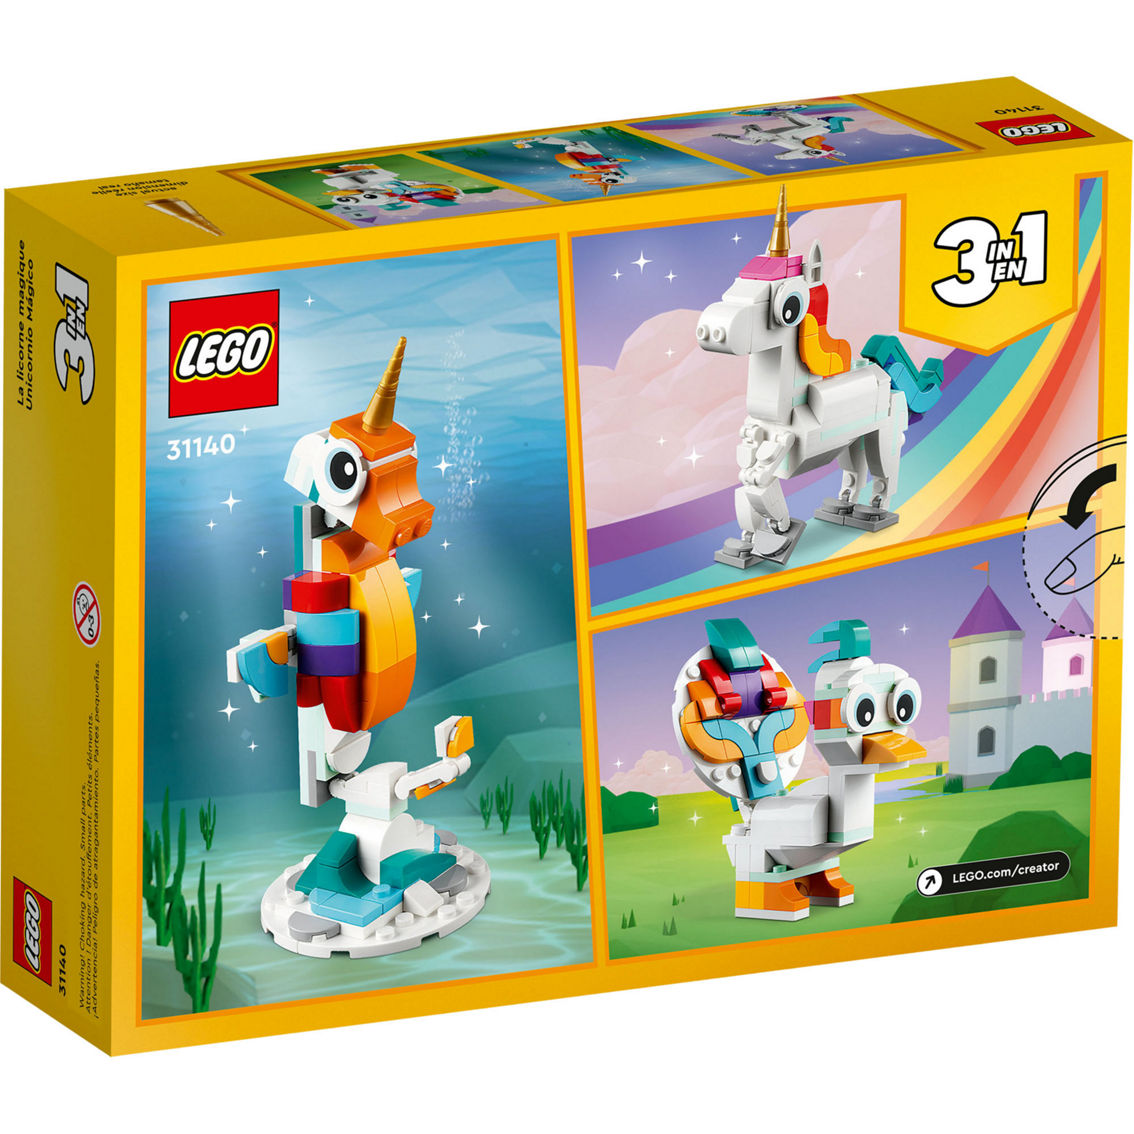 LEGO Creator Magical Unicorn - Image 2 of 6